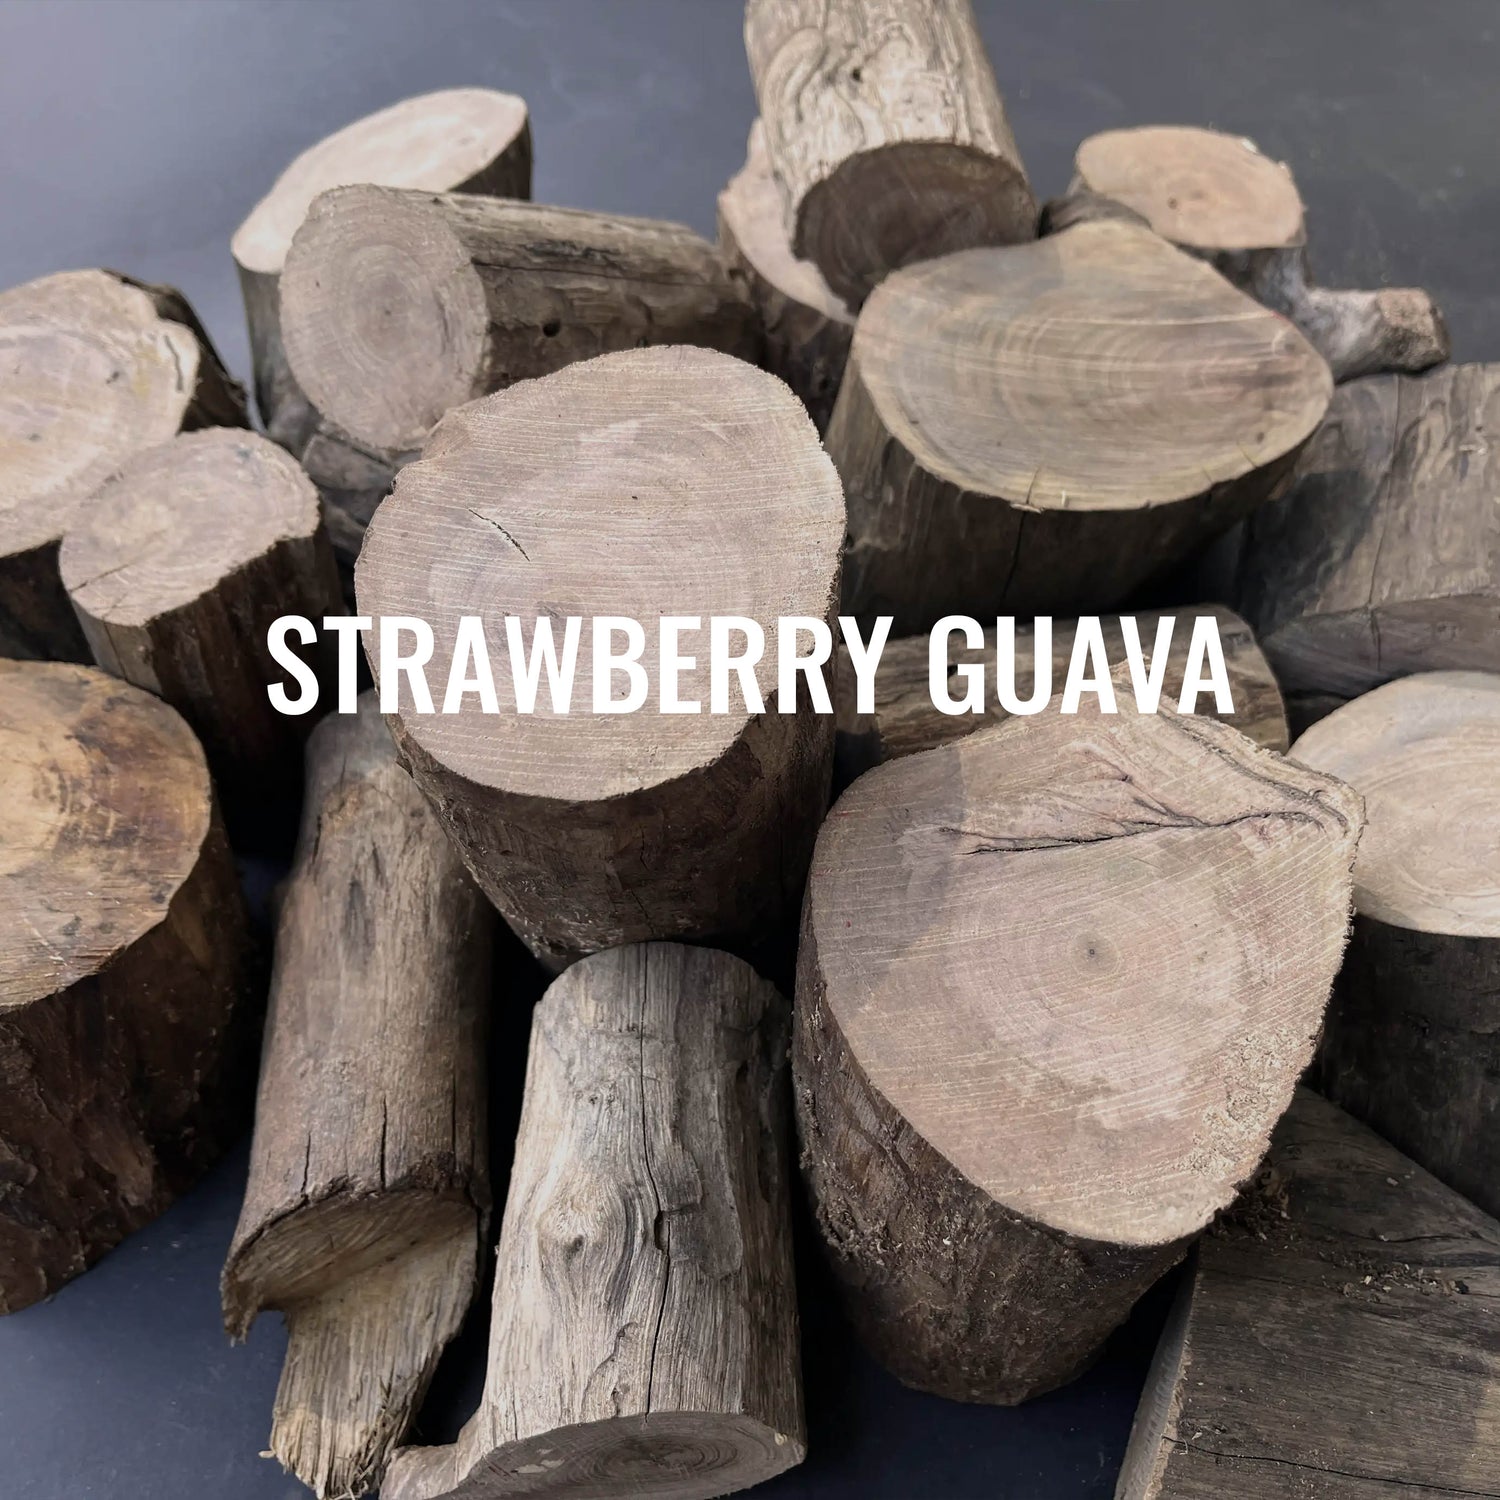 Strawberry Guava - FIREWOOD HAWAII